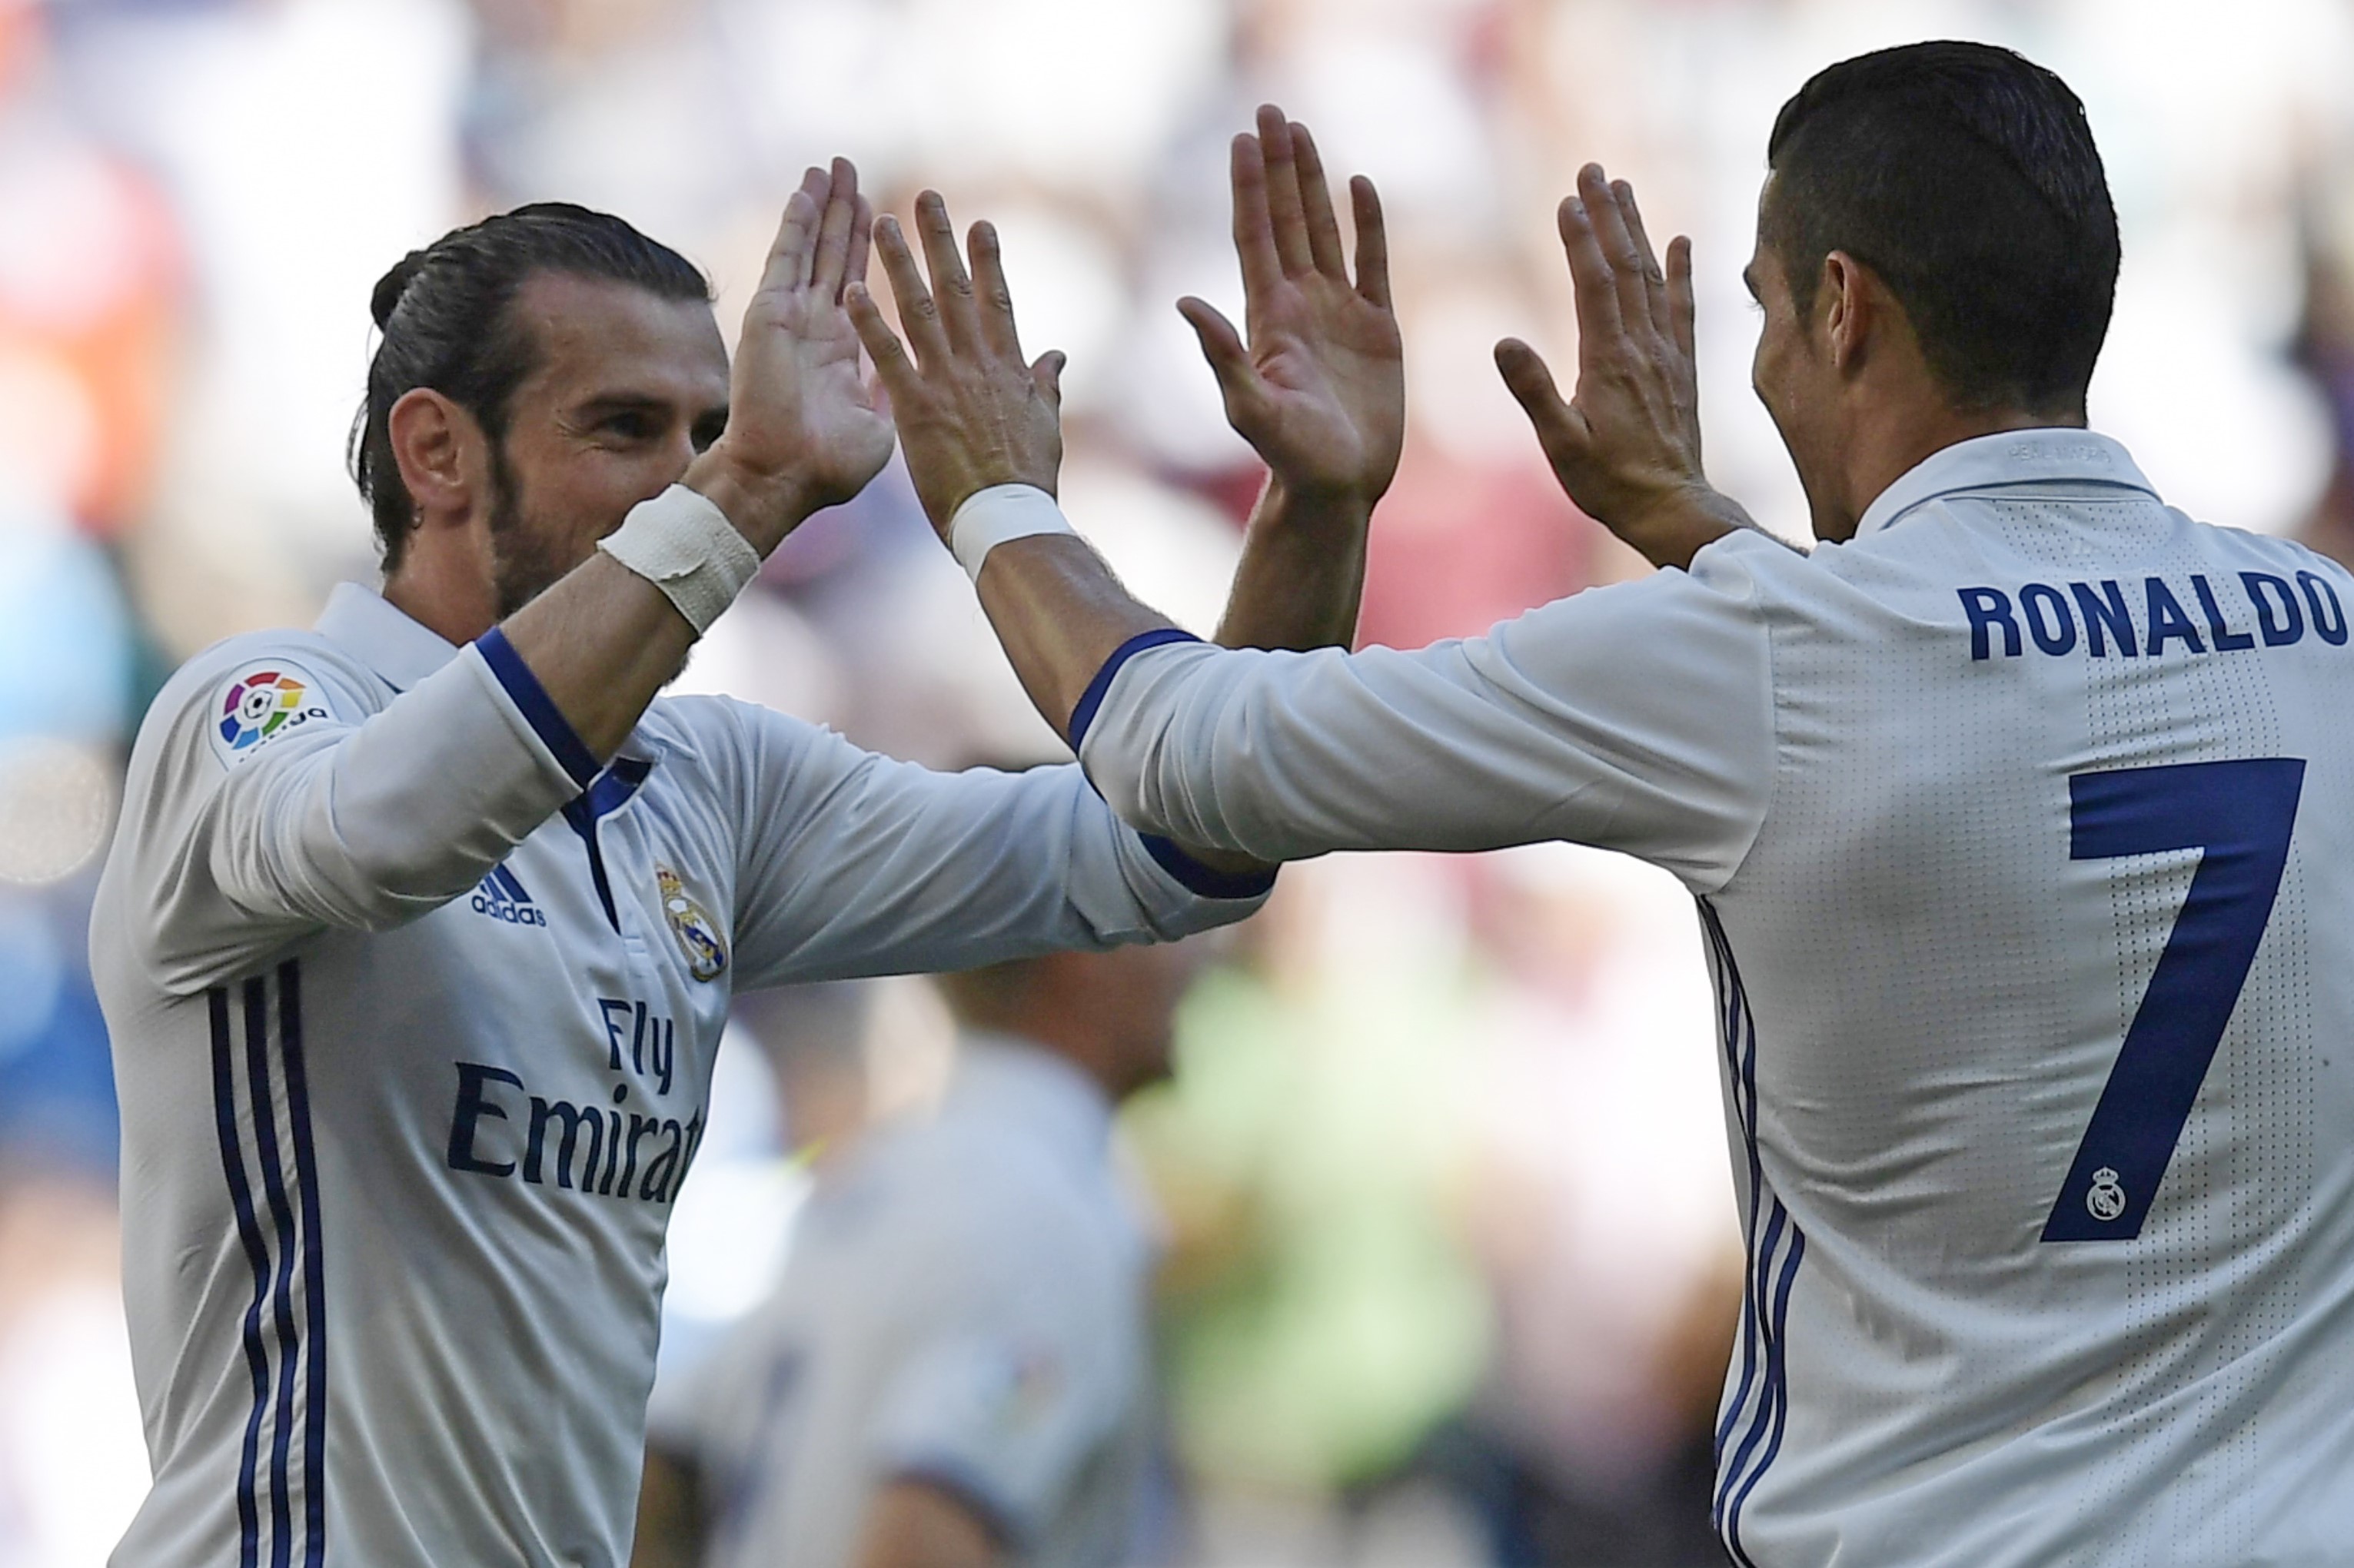 Cristiano y Bale